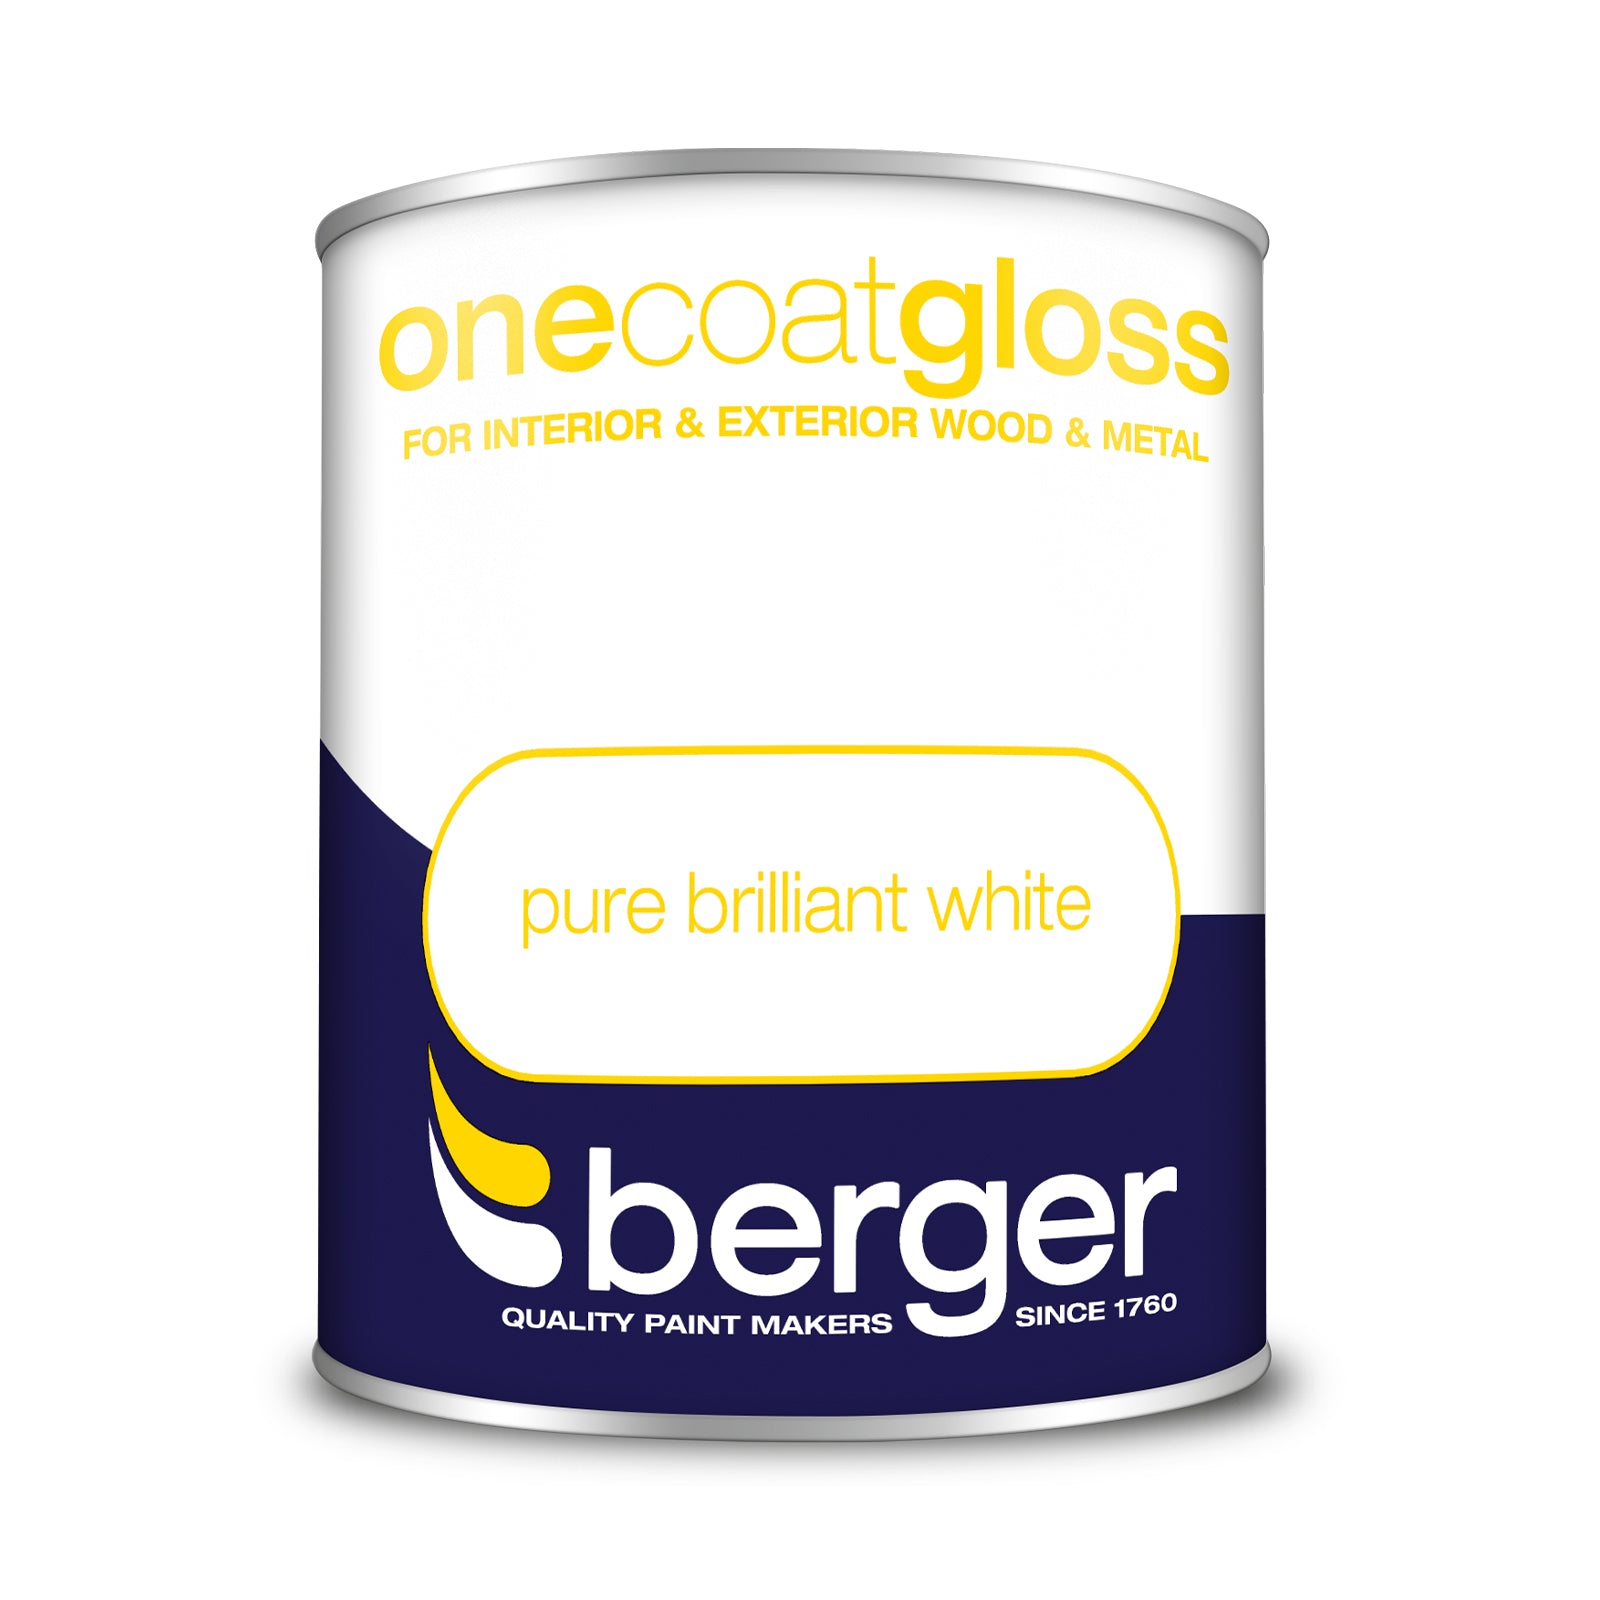 Berger One Coat Gloss Pure Brilliant White 750ml